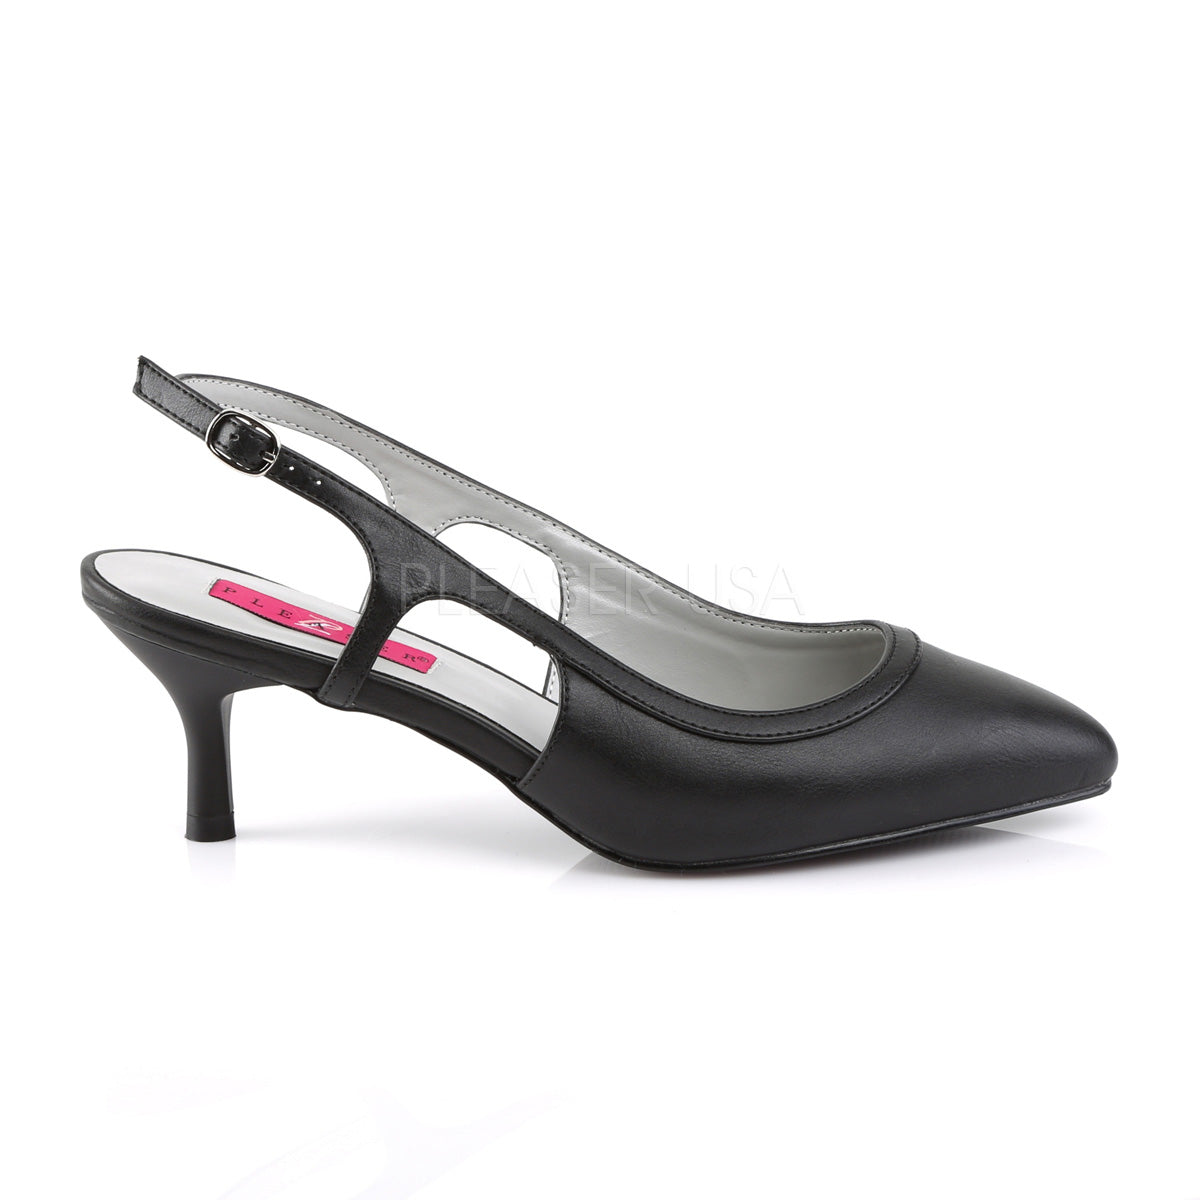 2.5 inch black heels